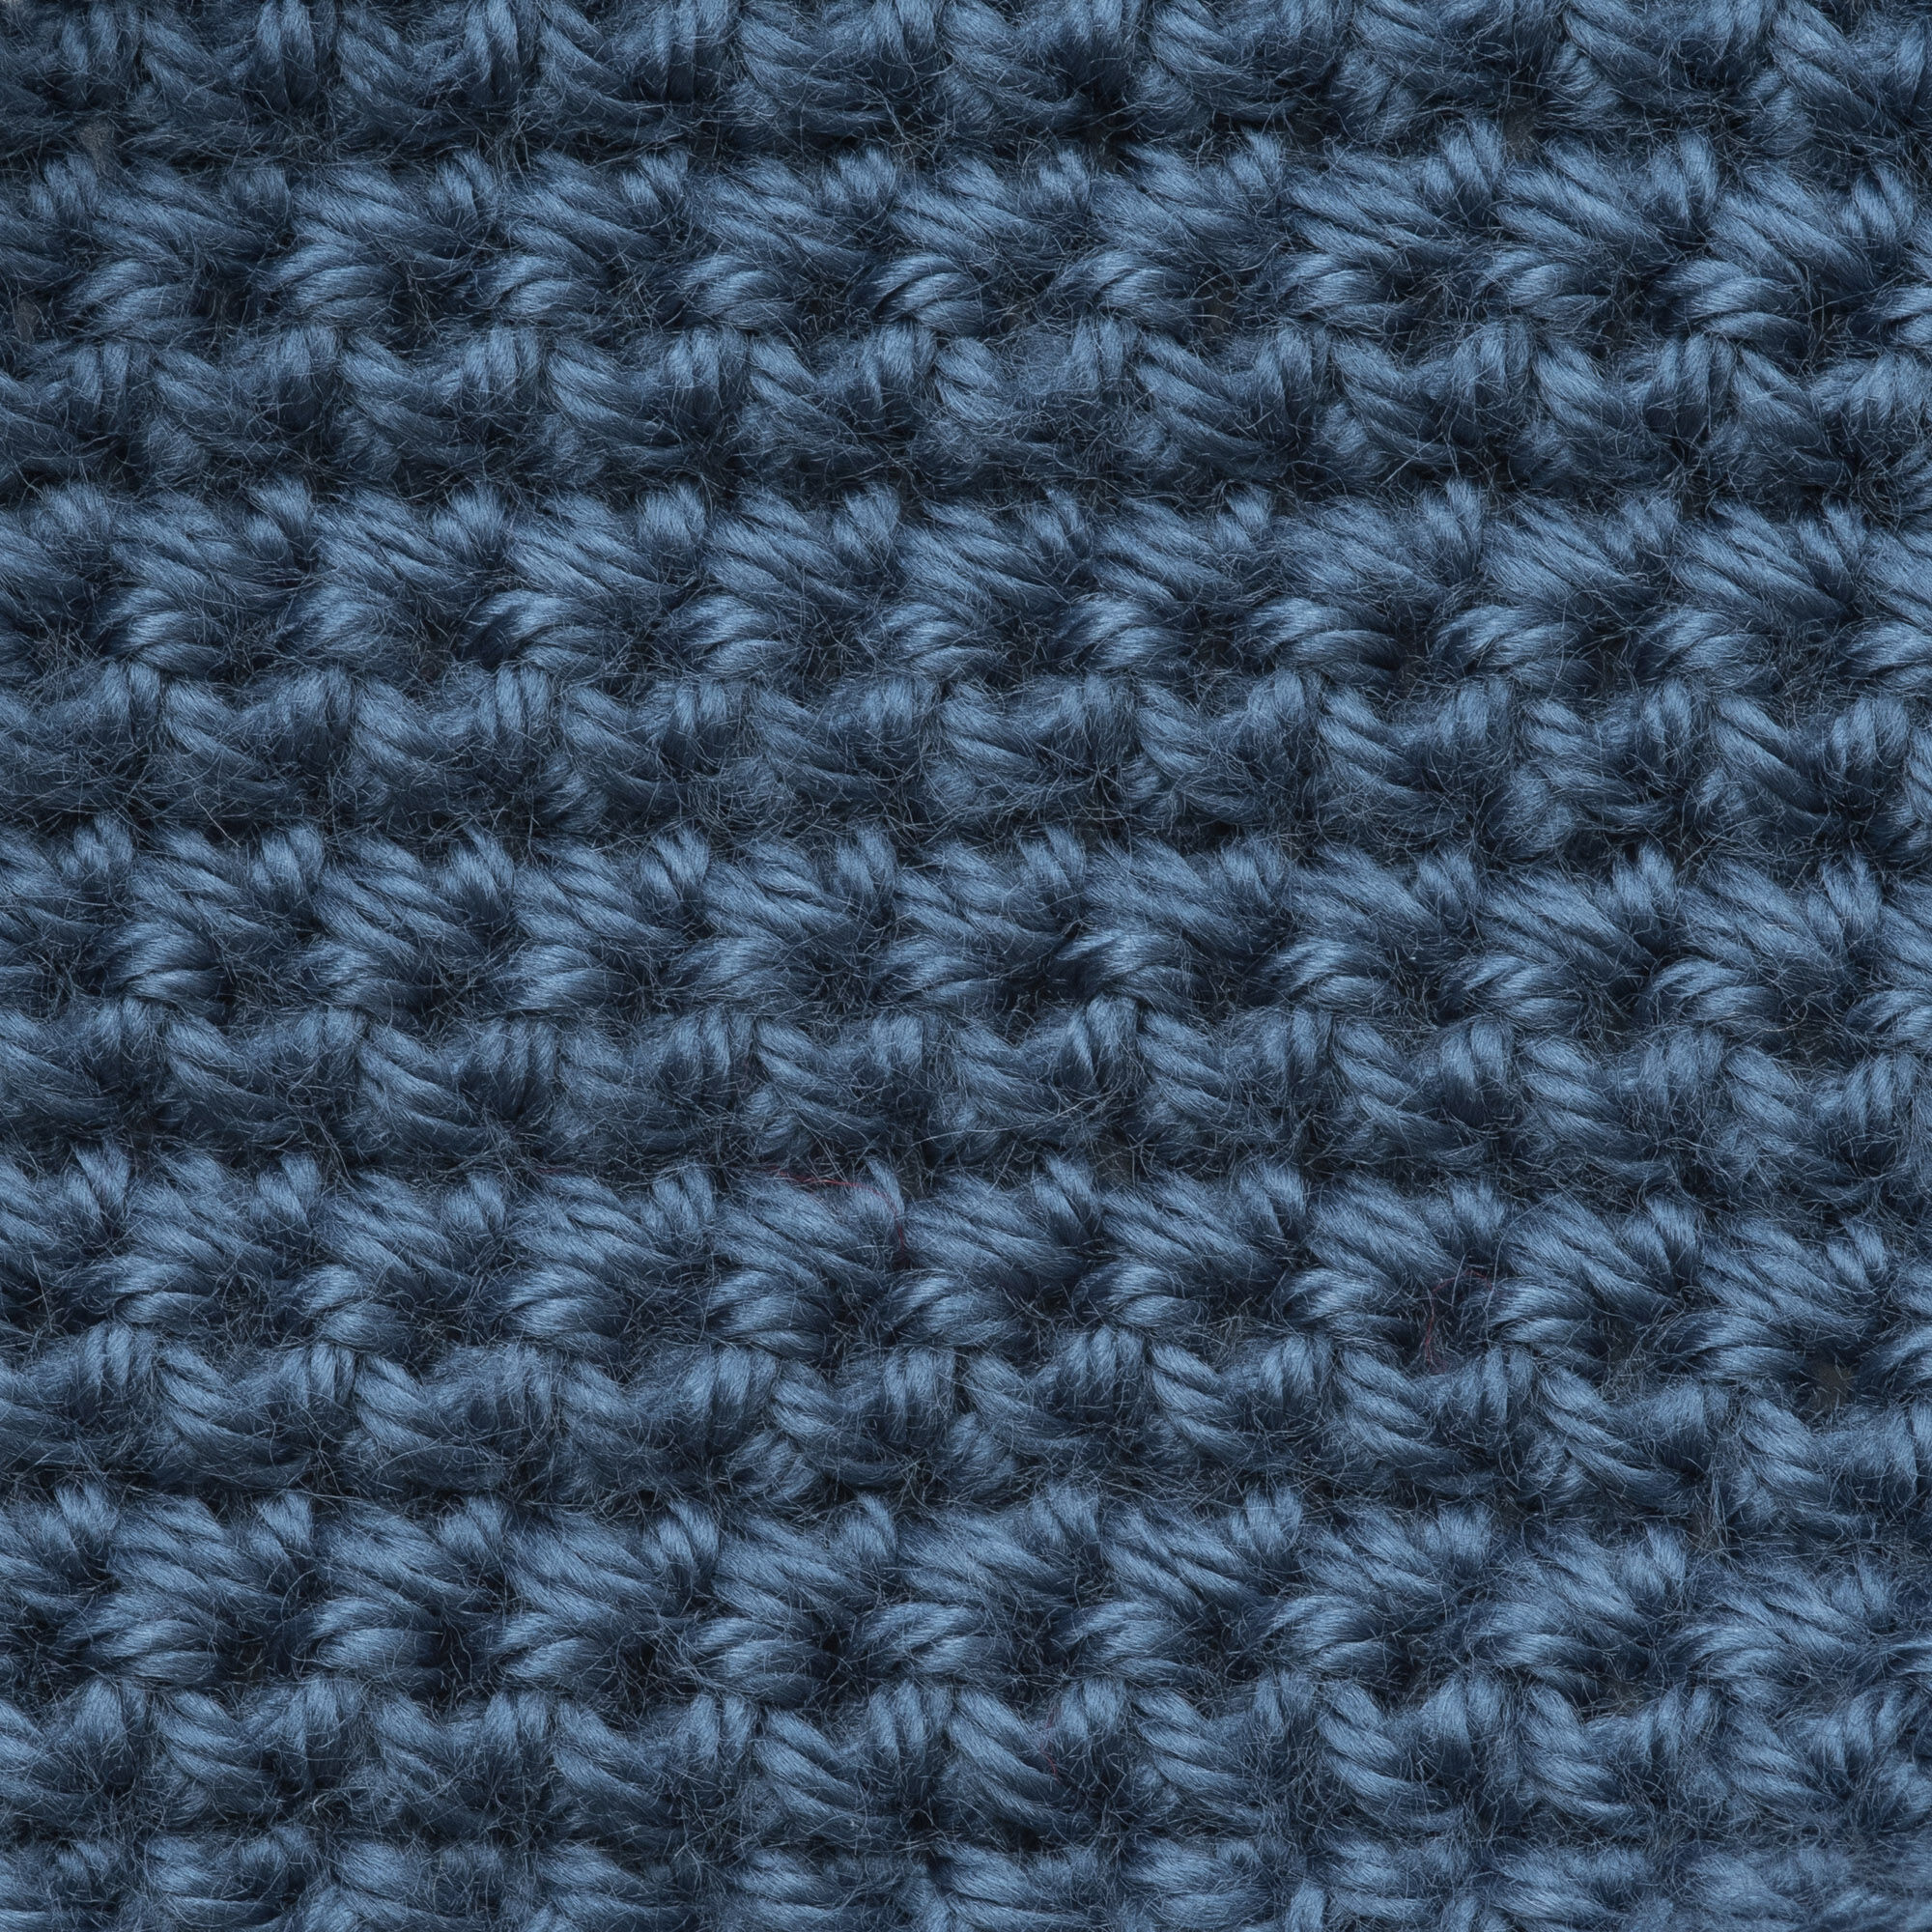 Caron Simply Soft 4 Medium Acrylic Yarn, Country Blue 6oz/170g, 315 Yards - image 2 of 16